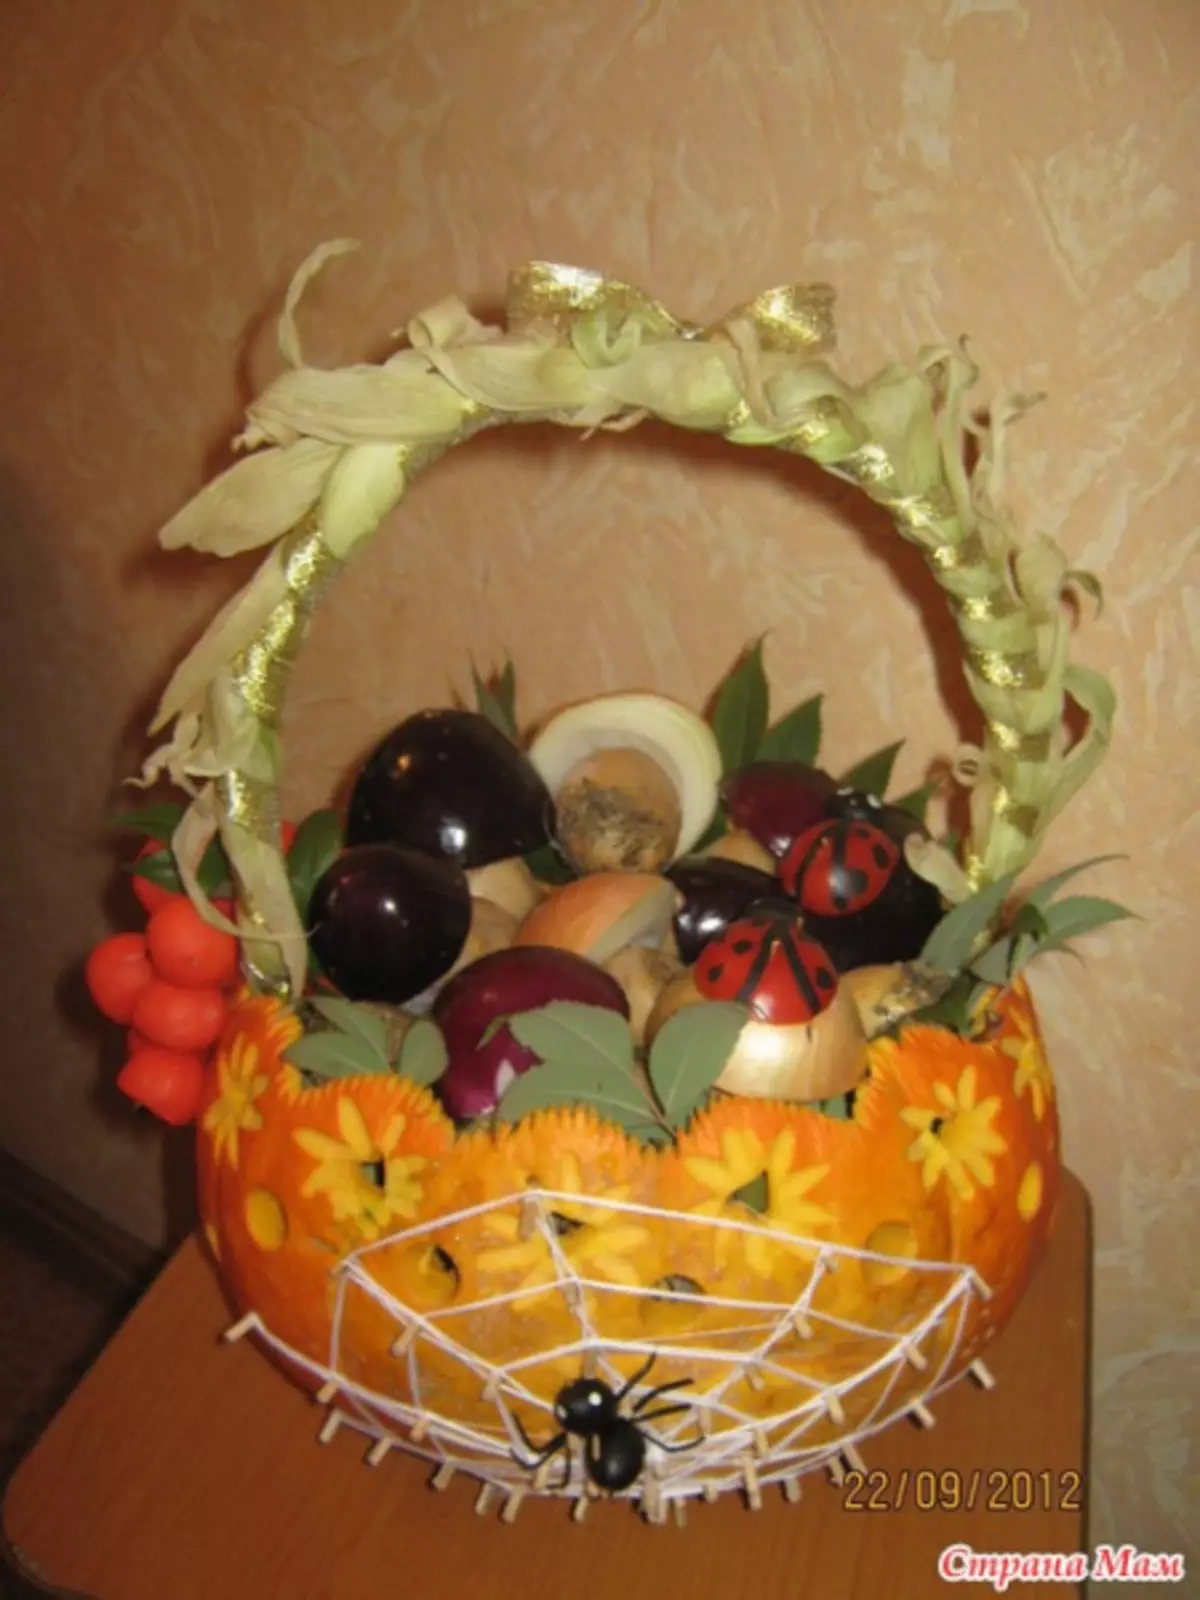 Pumpkin Basket DIY: Master Class Crafts nga adunay mga utanon